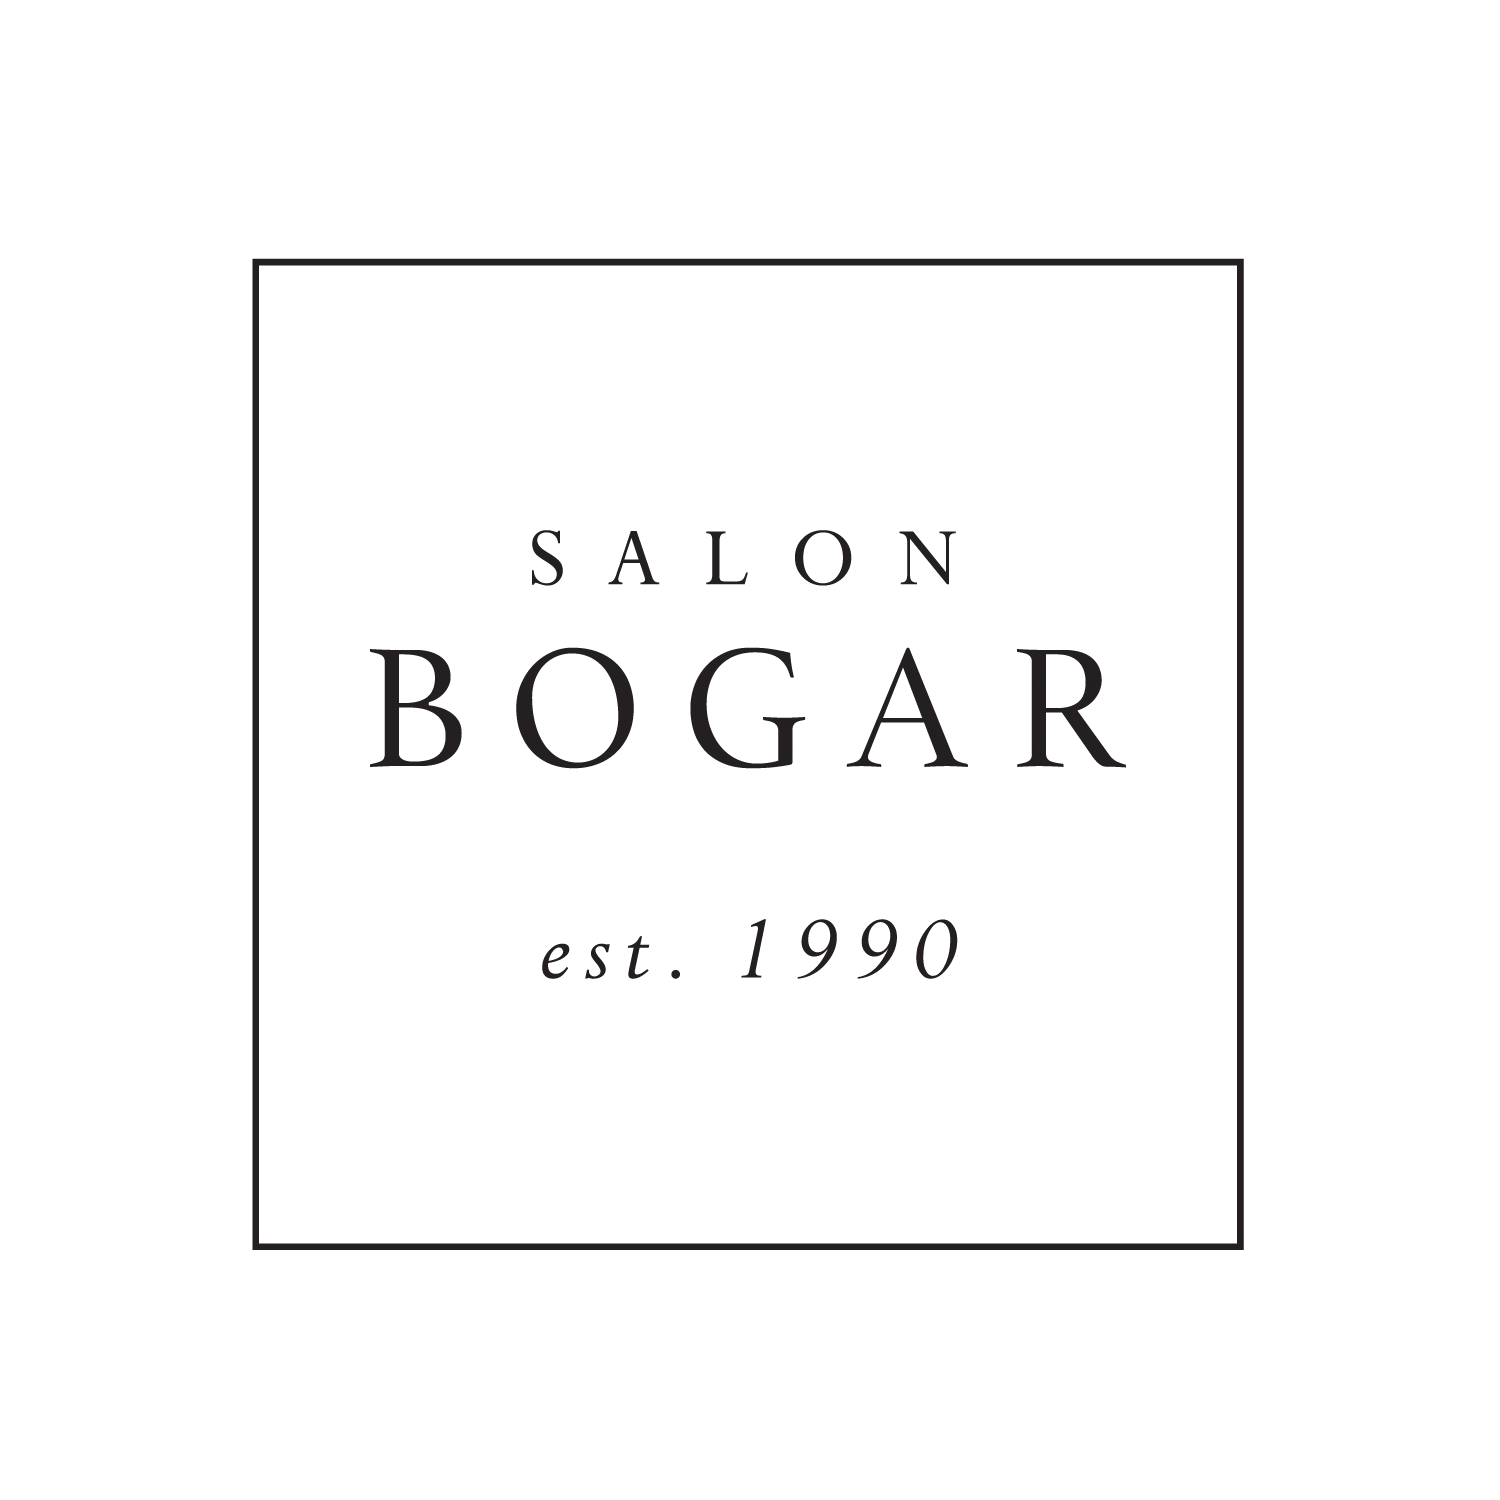 Salon Bogar